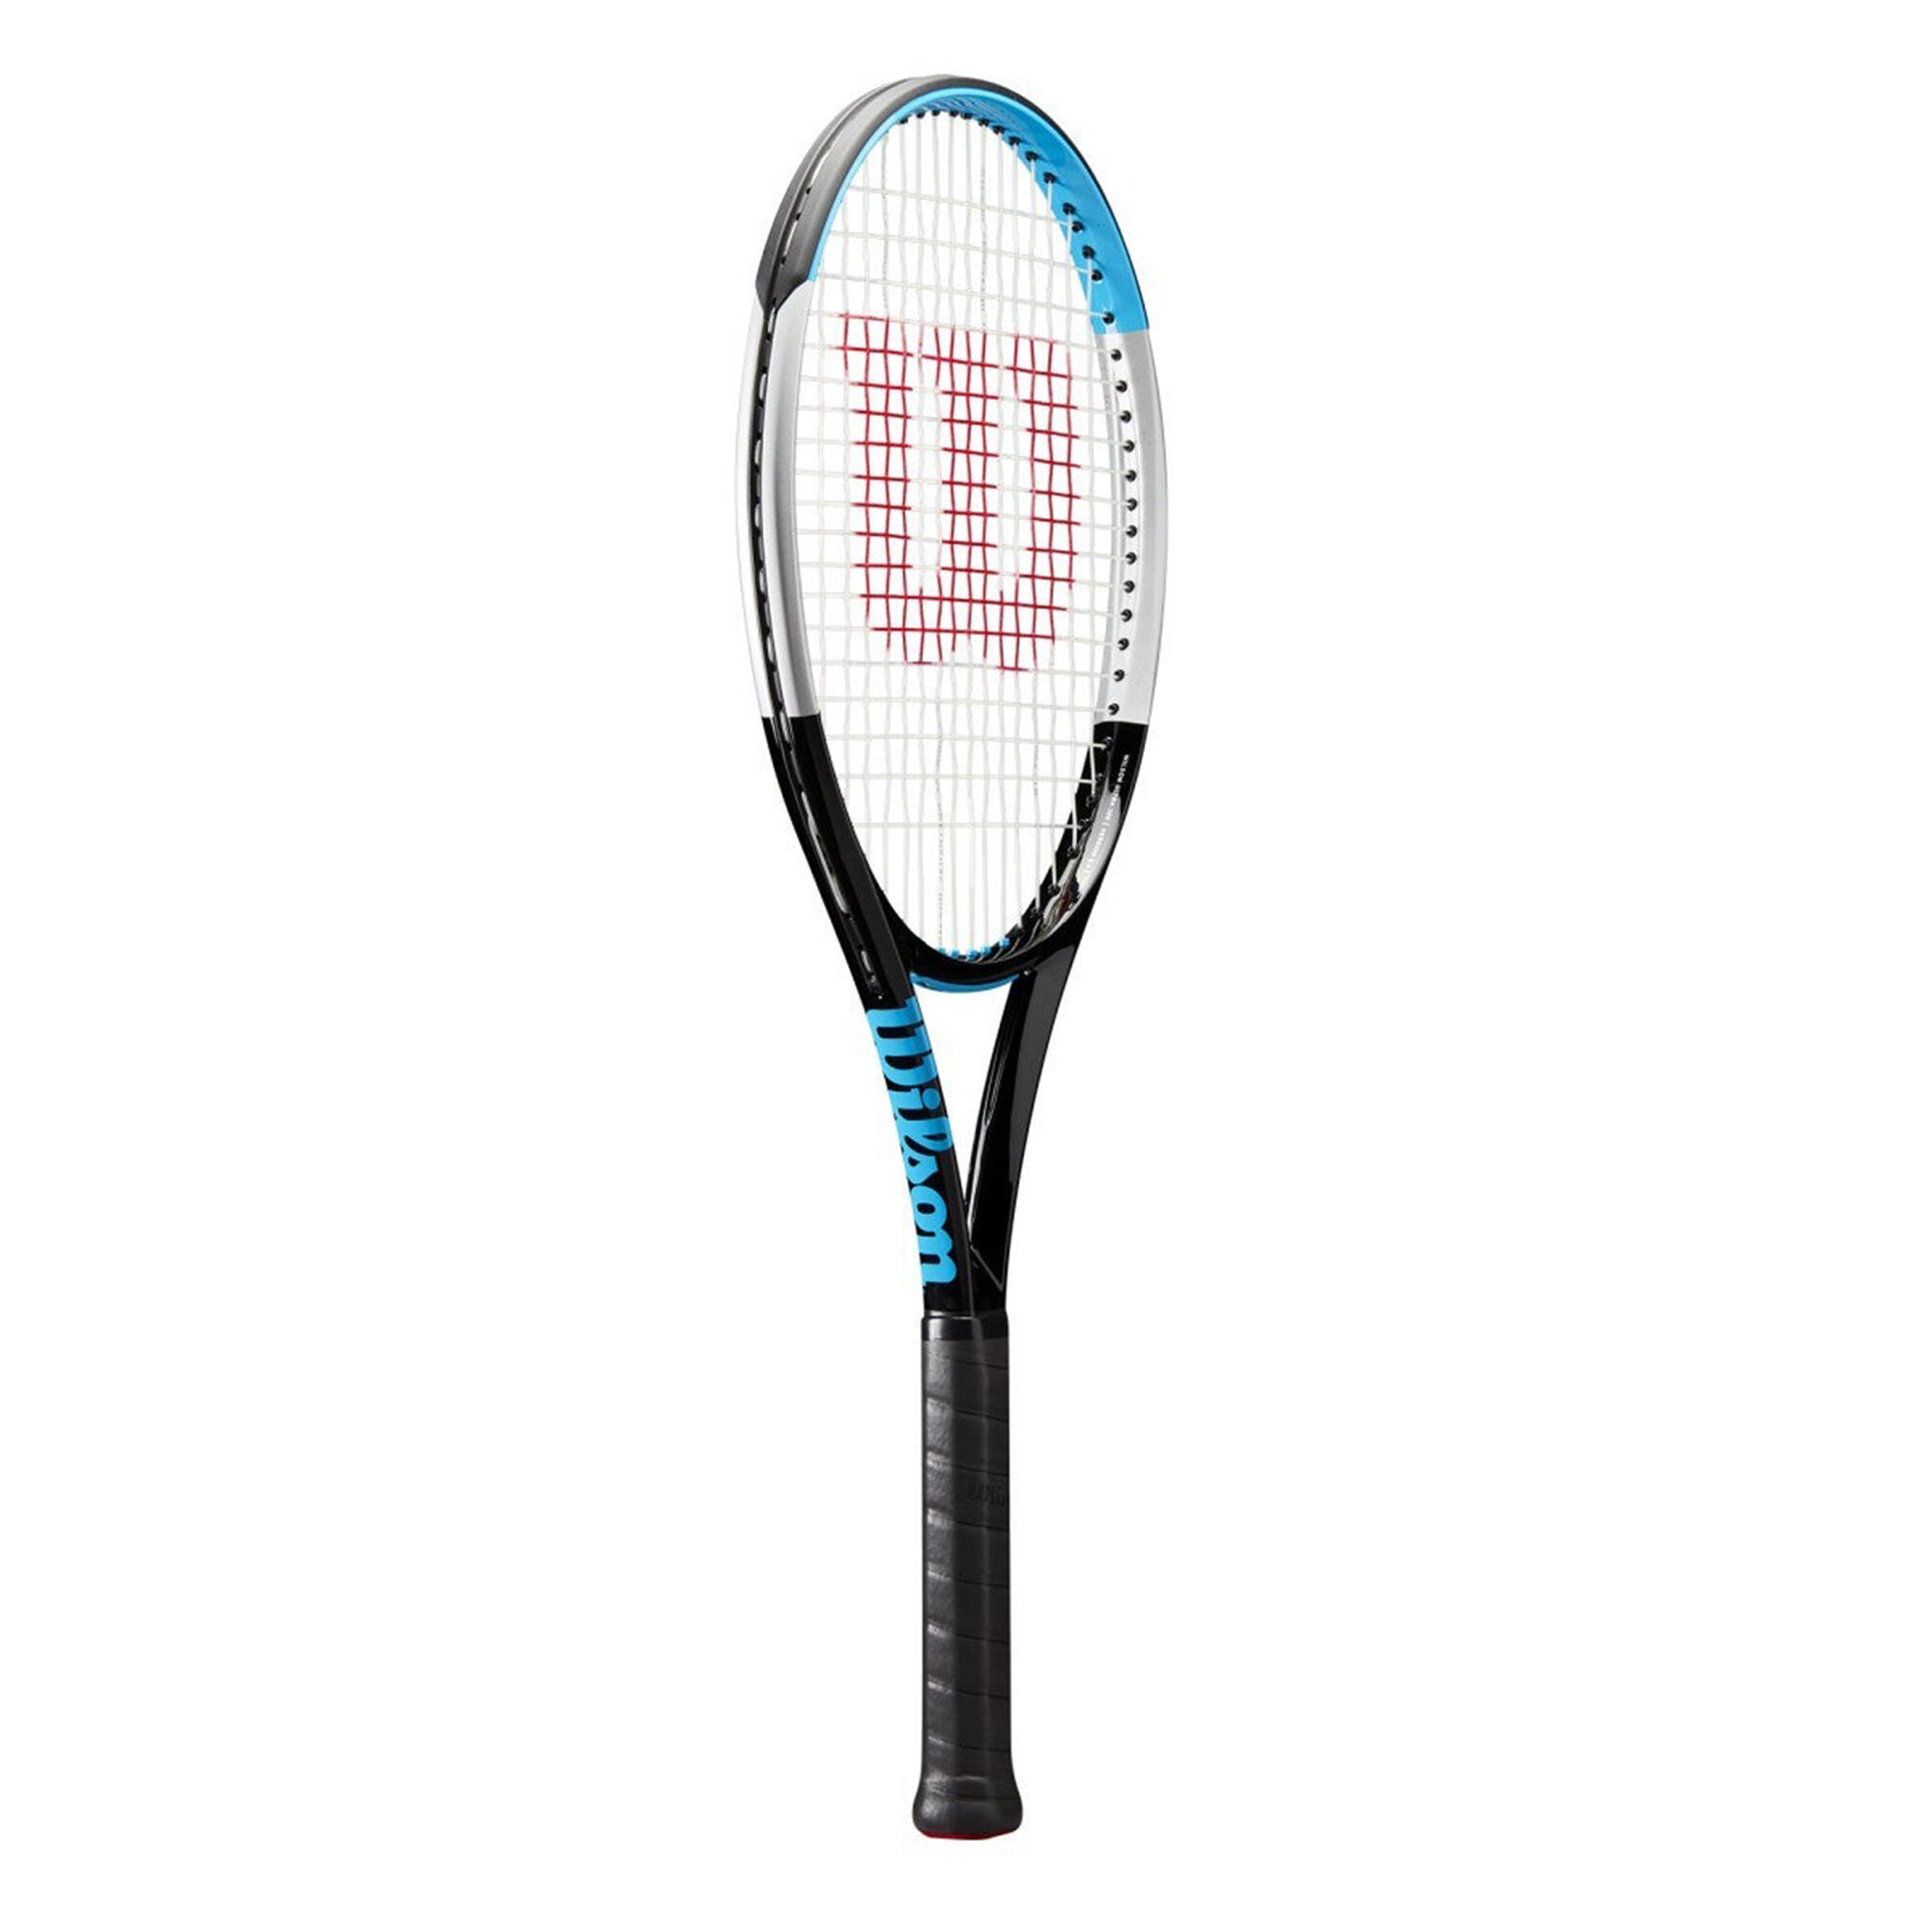 WILSON Adult Unstrung Tennis Racket Ultra 100 V3.0 - Black/Blue